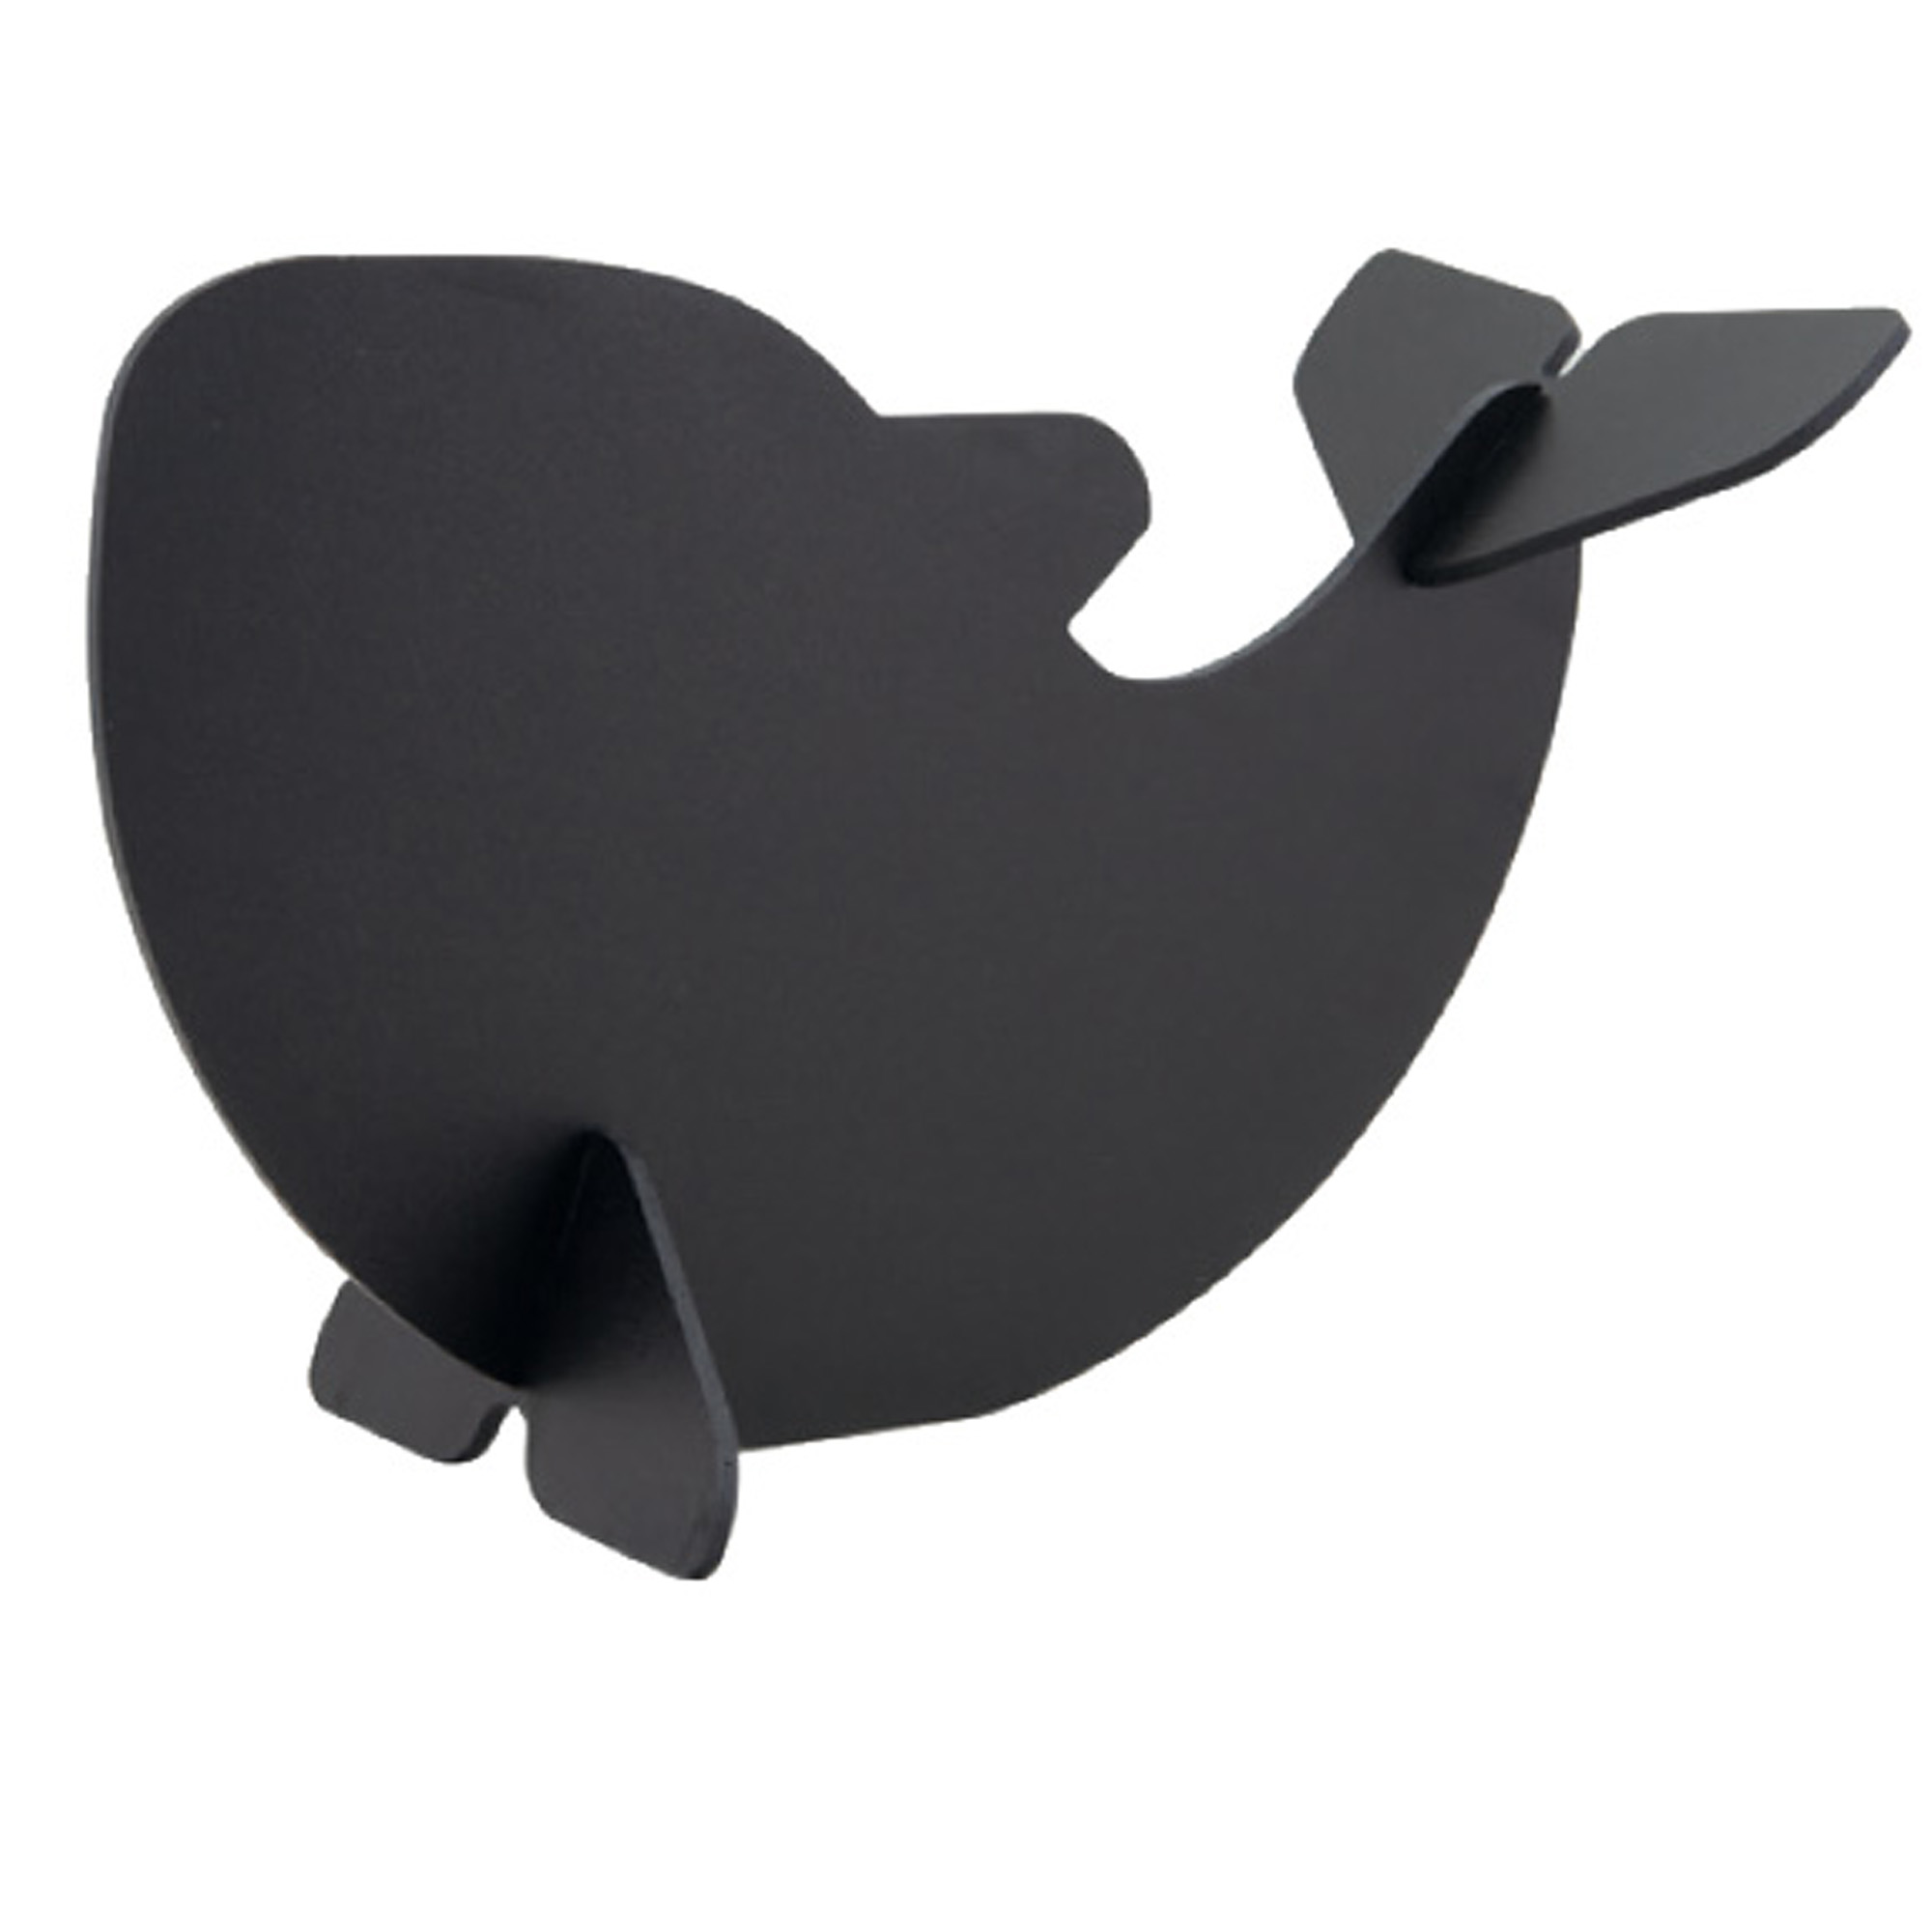 Lavagna Silhouette - forma balena - 22 x 14,5 x 10 cm - nero - Securit su